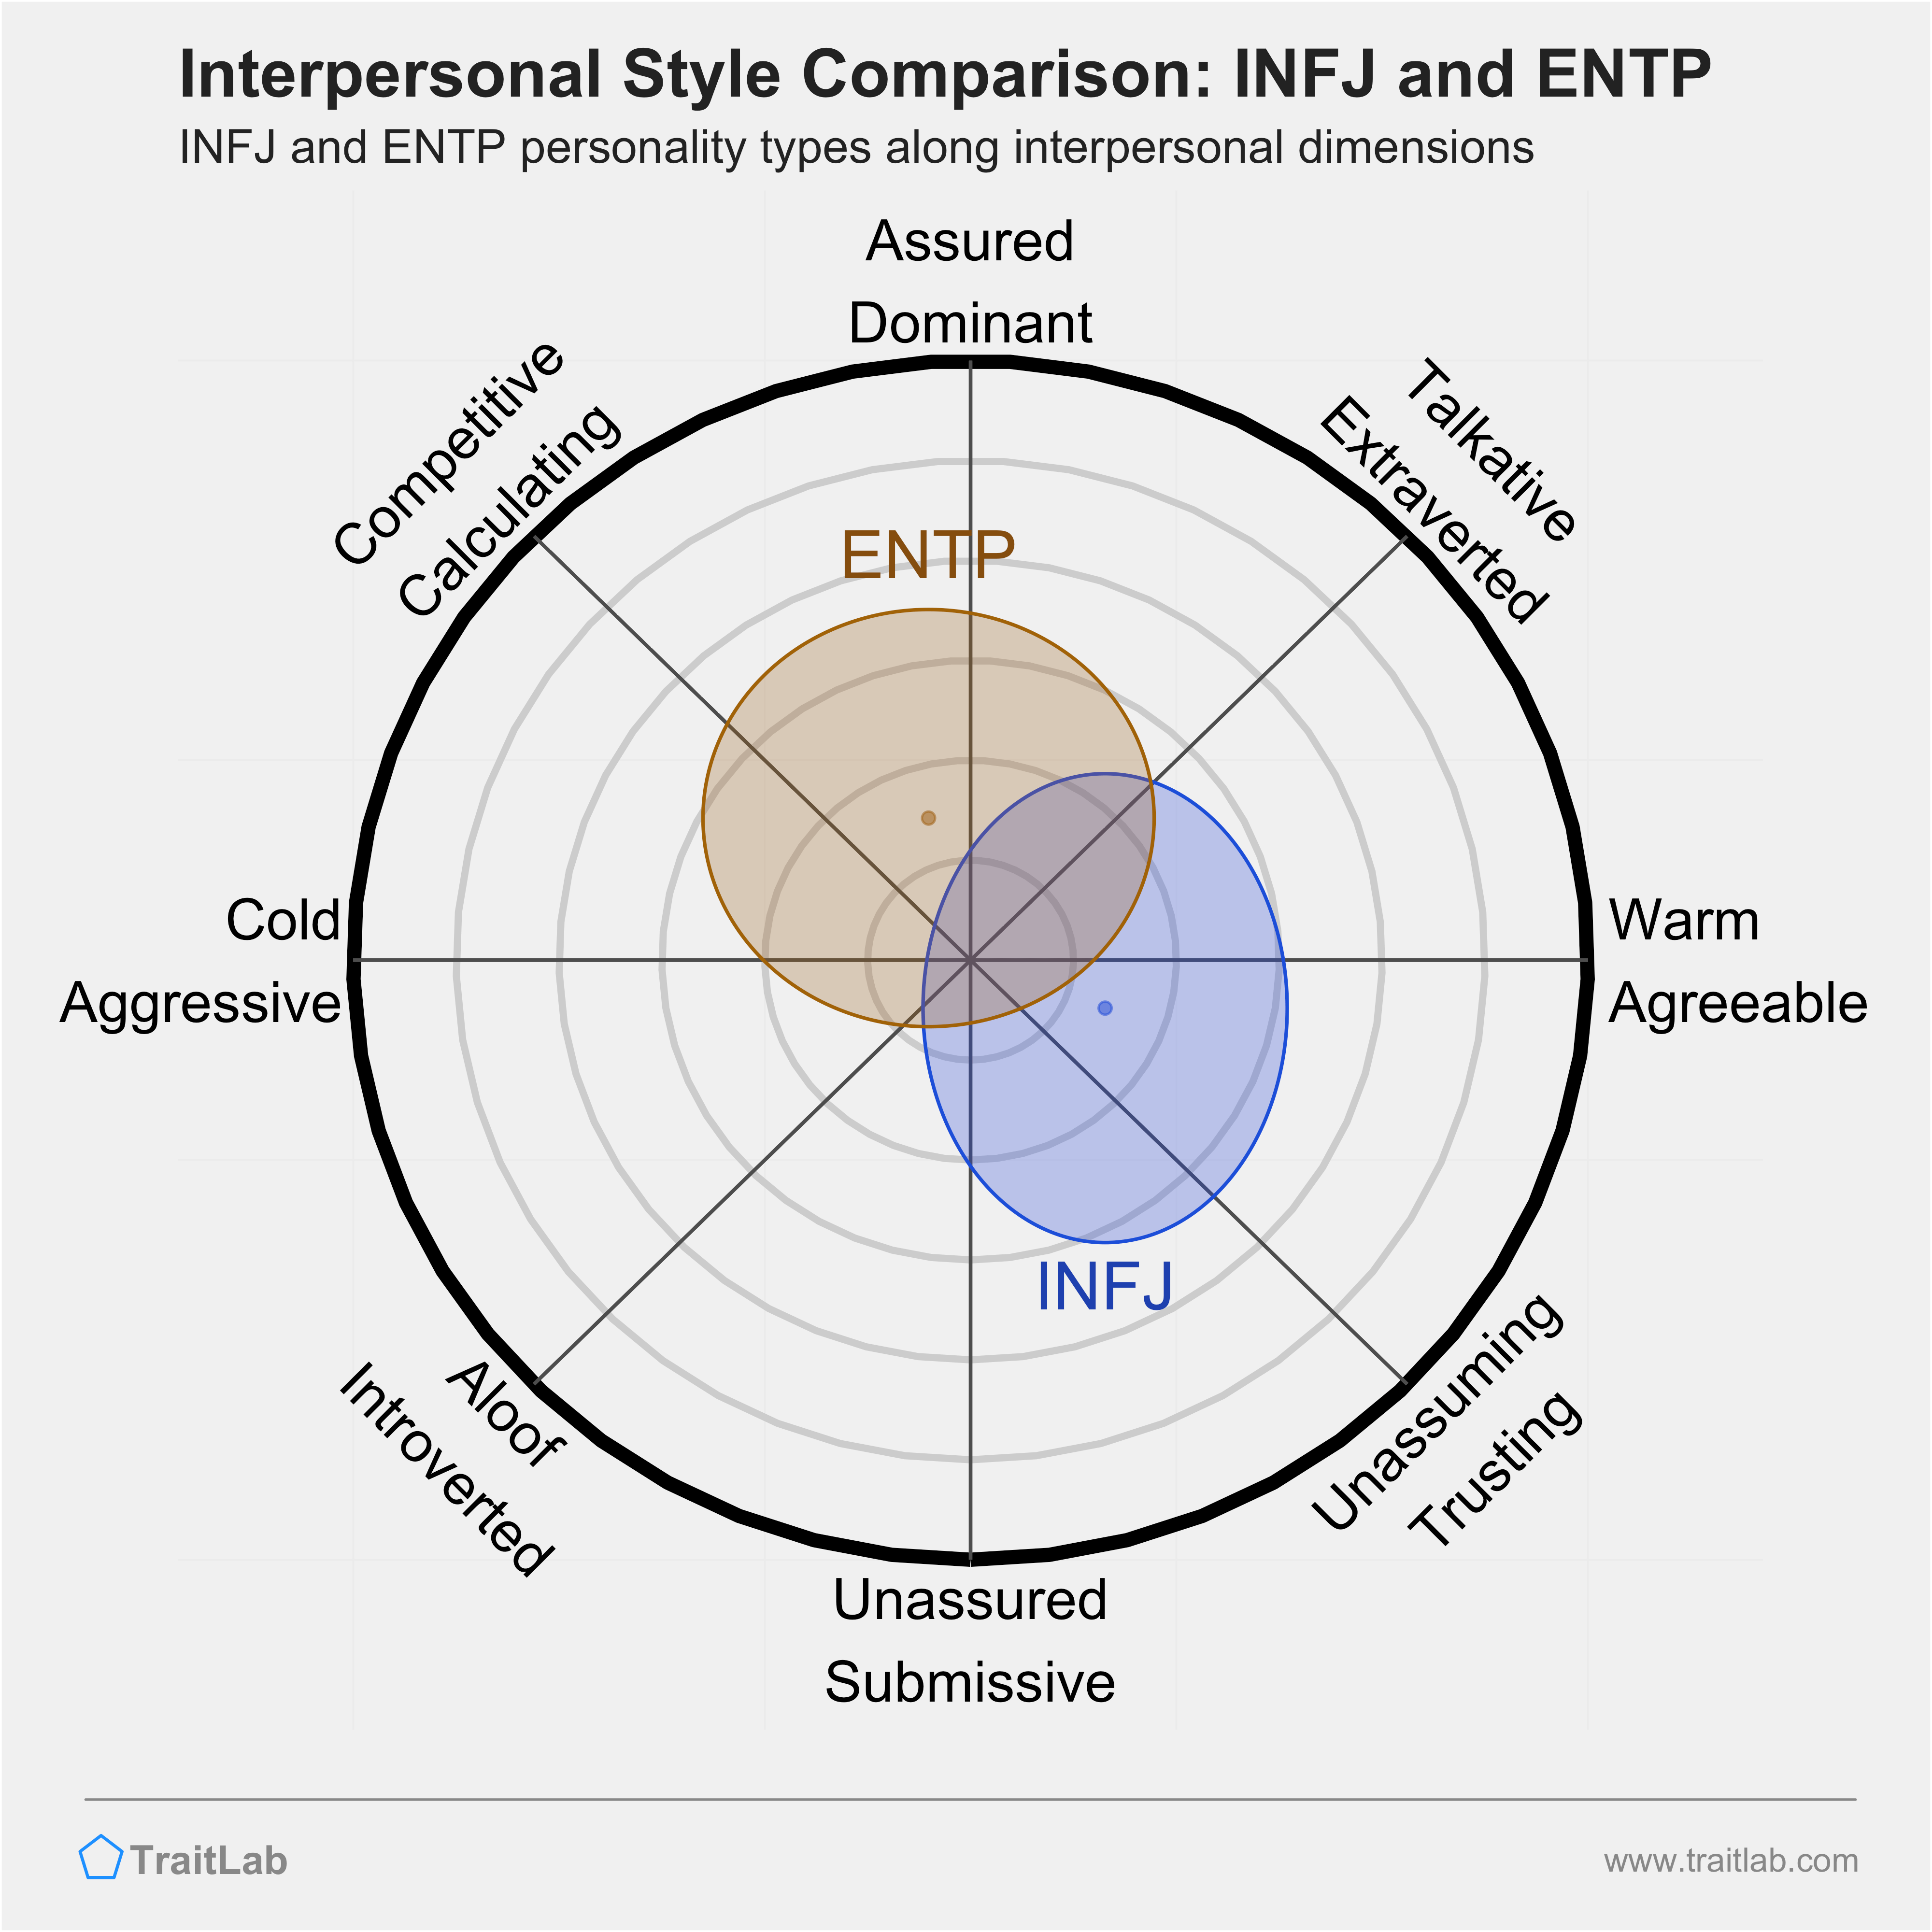 INFJ and ENTP comparison across interpersonal dimensions